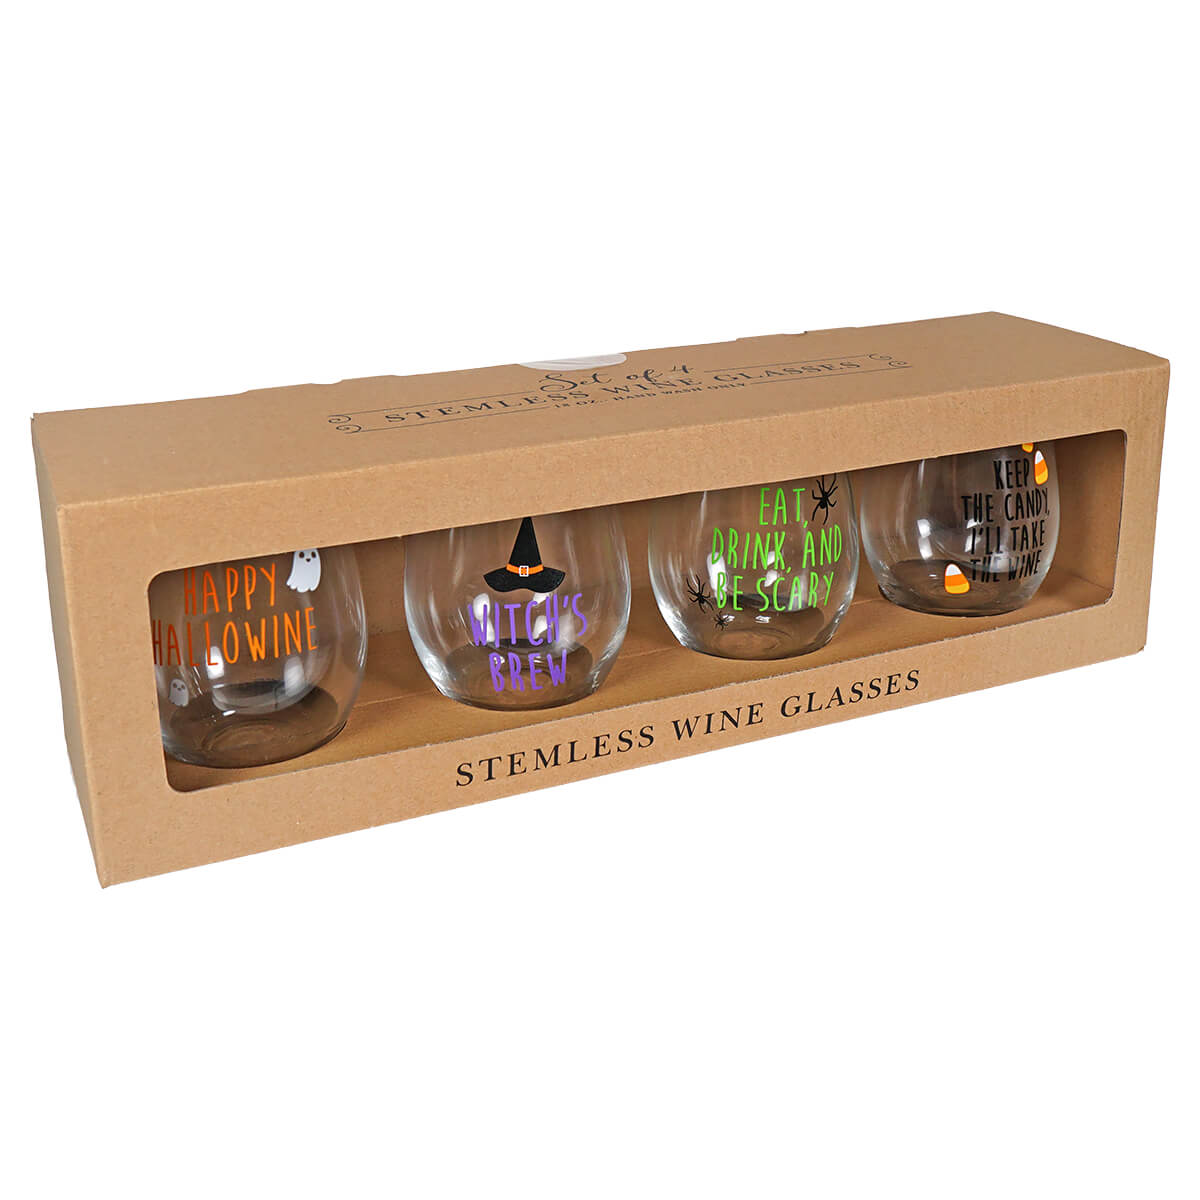 Glass 18oz Halloween Stemless Wine Glasses Set/4